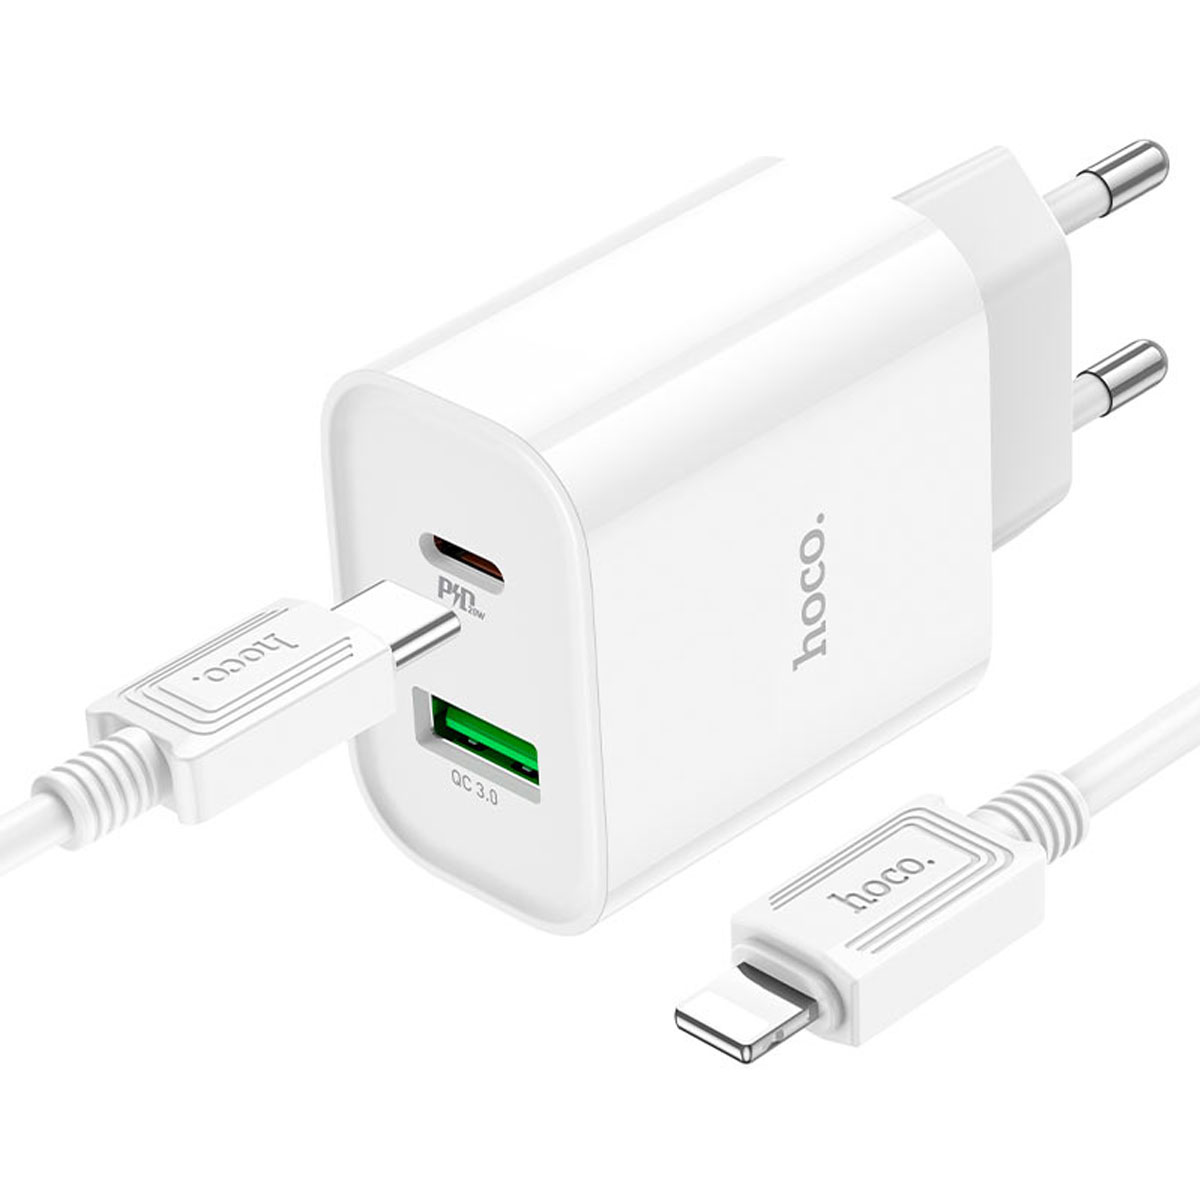 СЗУ (Сетевое зарядное устройство) HOCO C80A Plus Rapido с кабелем USB Type C на Lightning 8 pin, 20W, 1 USB Type C, 1 USB, QC3.0, PD20W, длина 1 метр, цвет белый